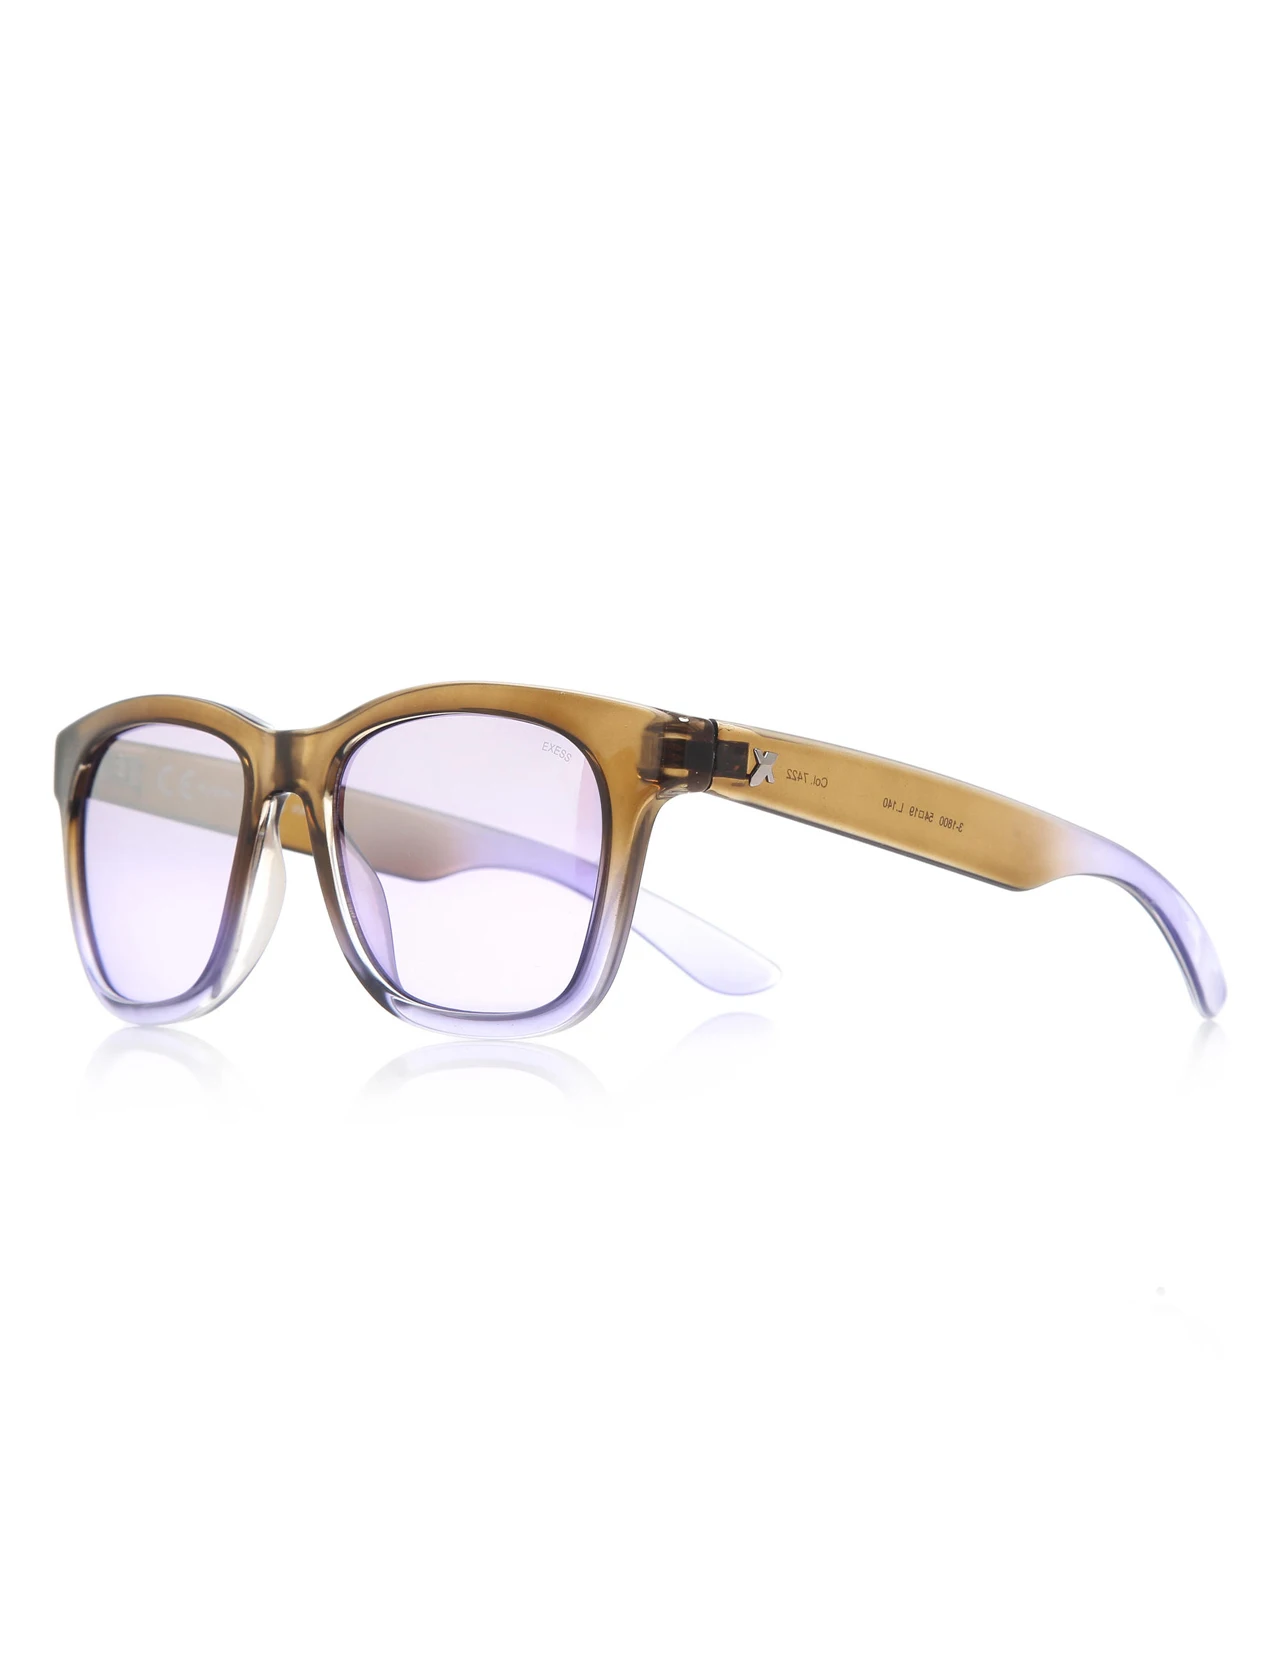 

Unisex sunglasses e 1800 7422 bone color organic rectangle rectangular 54-19-140 exess